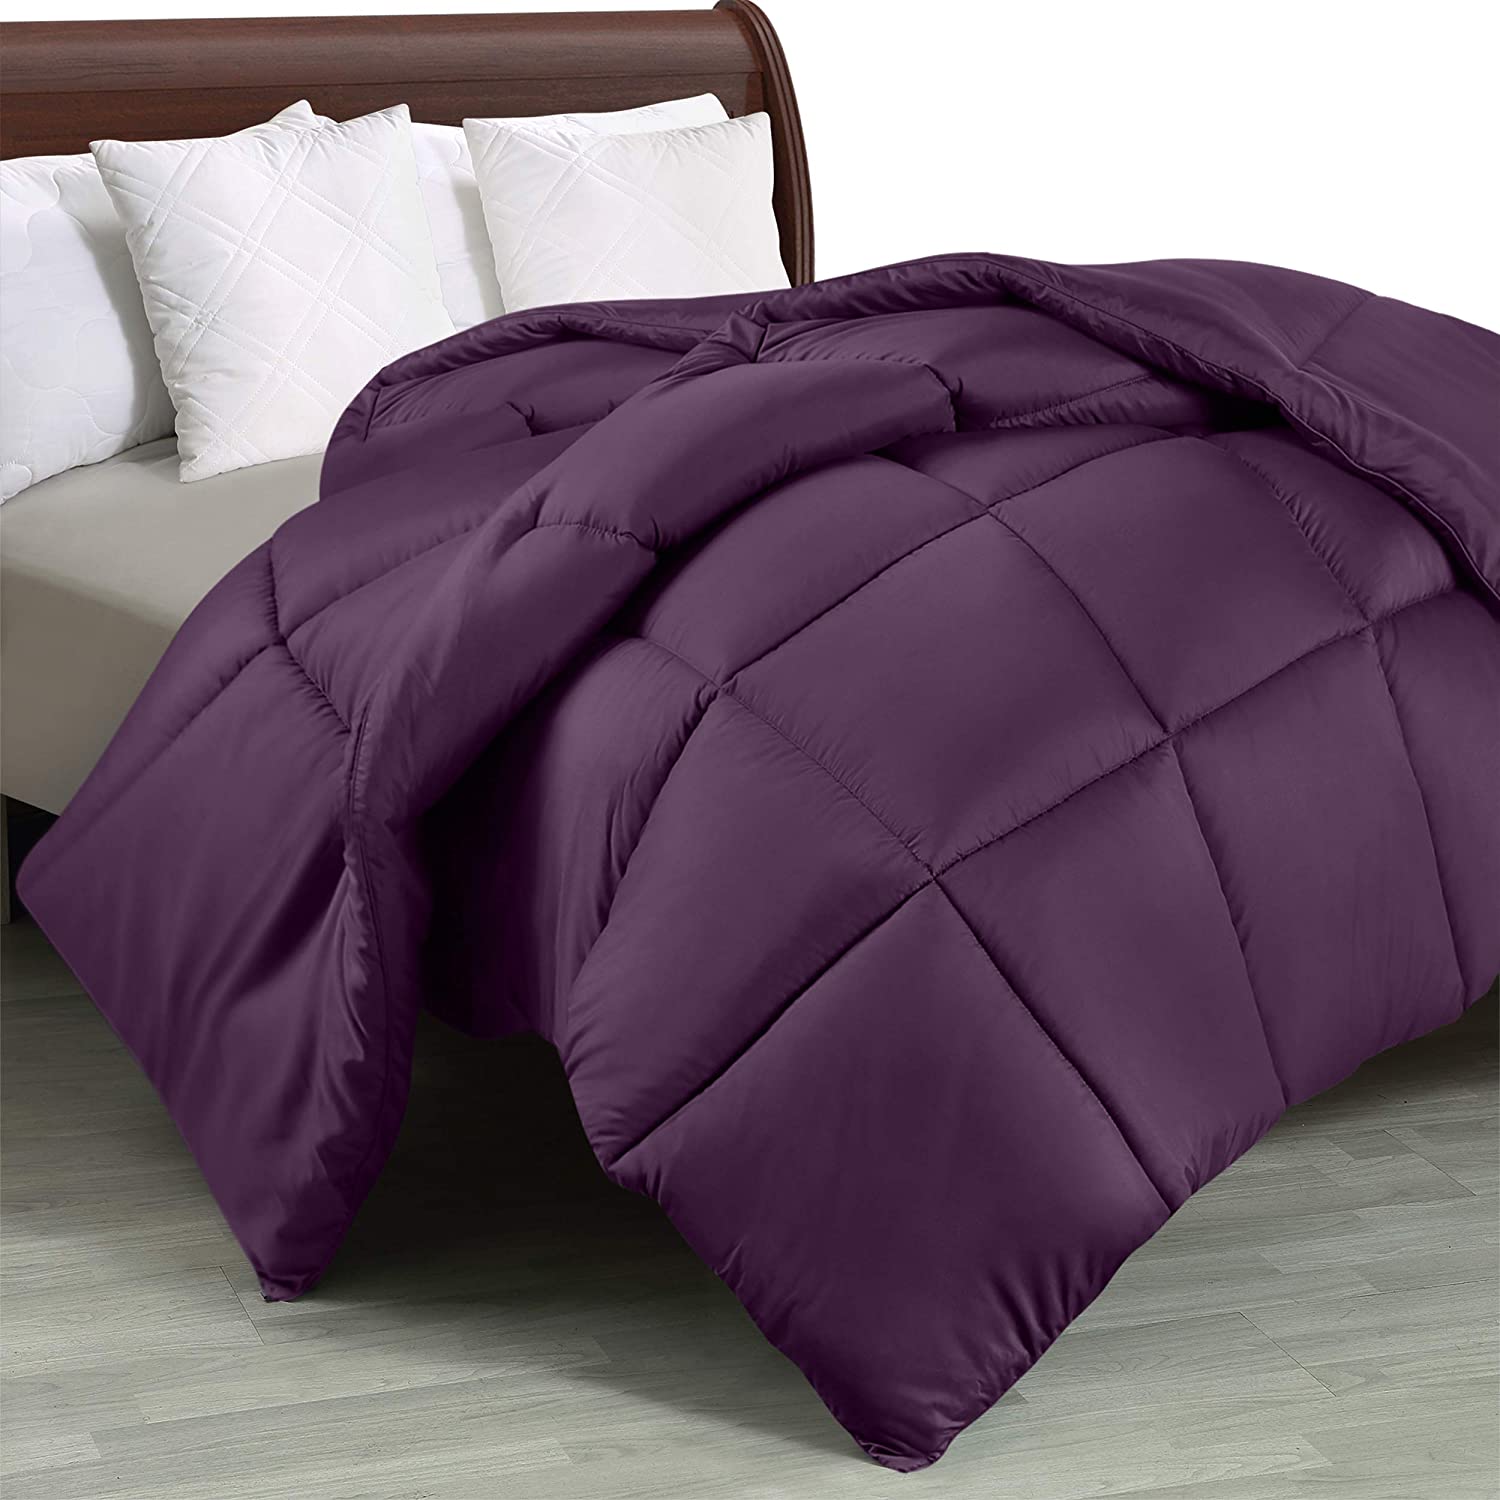 utopia bedding comforter